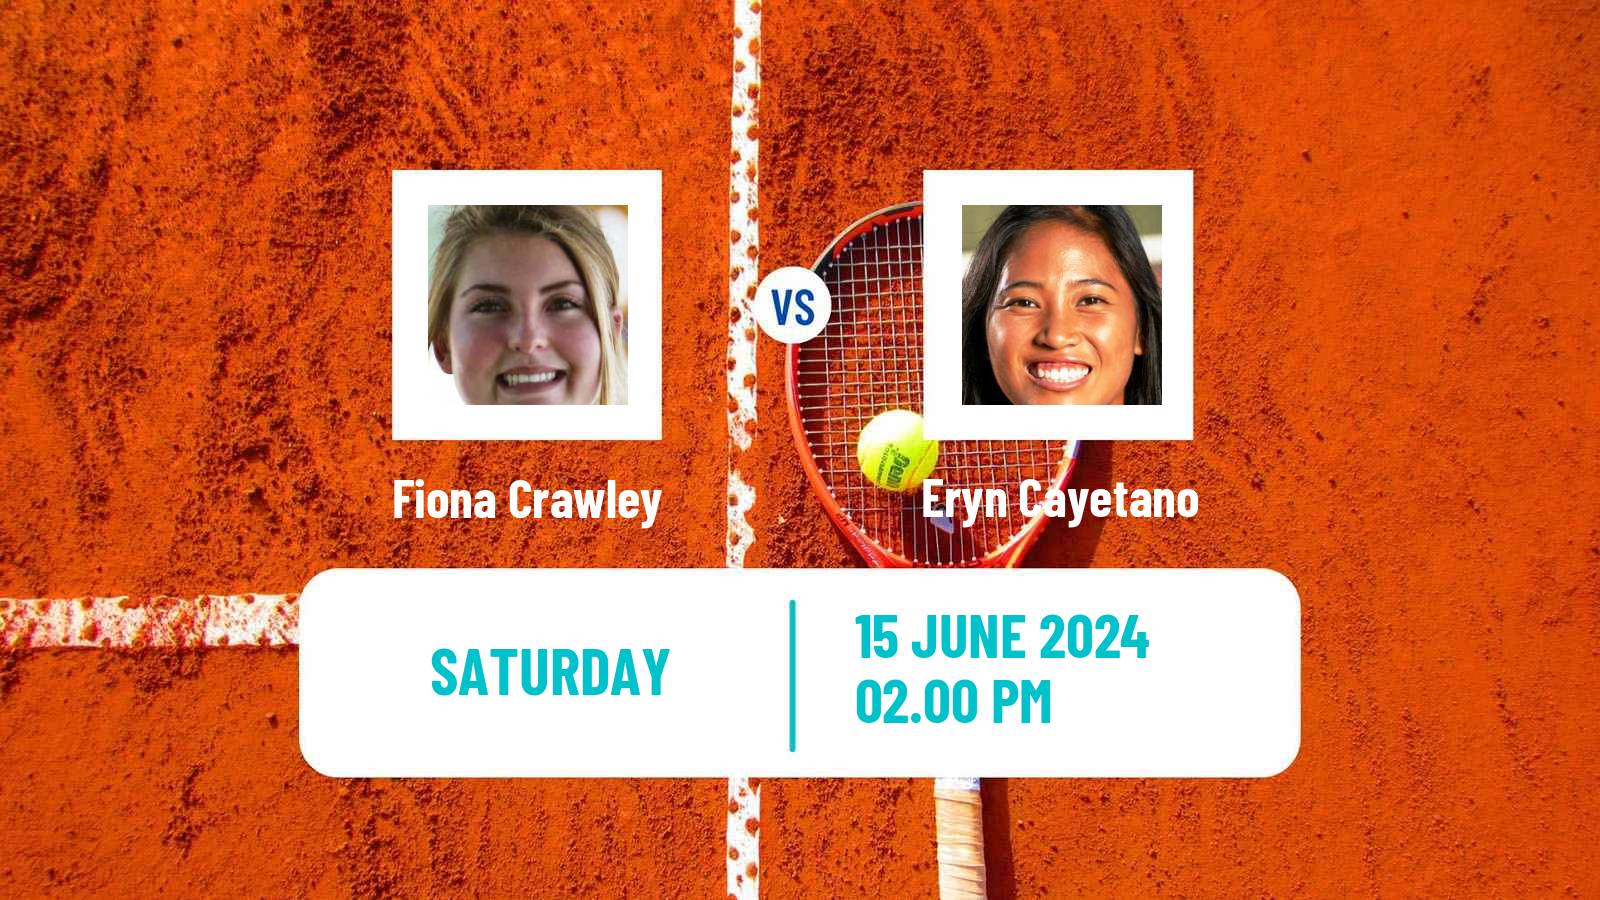 Tennis ITF W15 San Diego Ca 3 Women Fiona Crawley - Eryn Cayetano